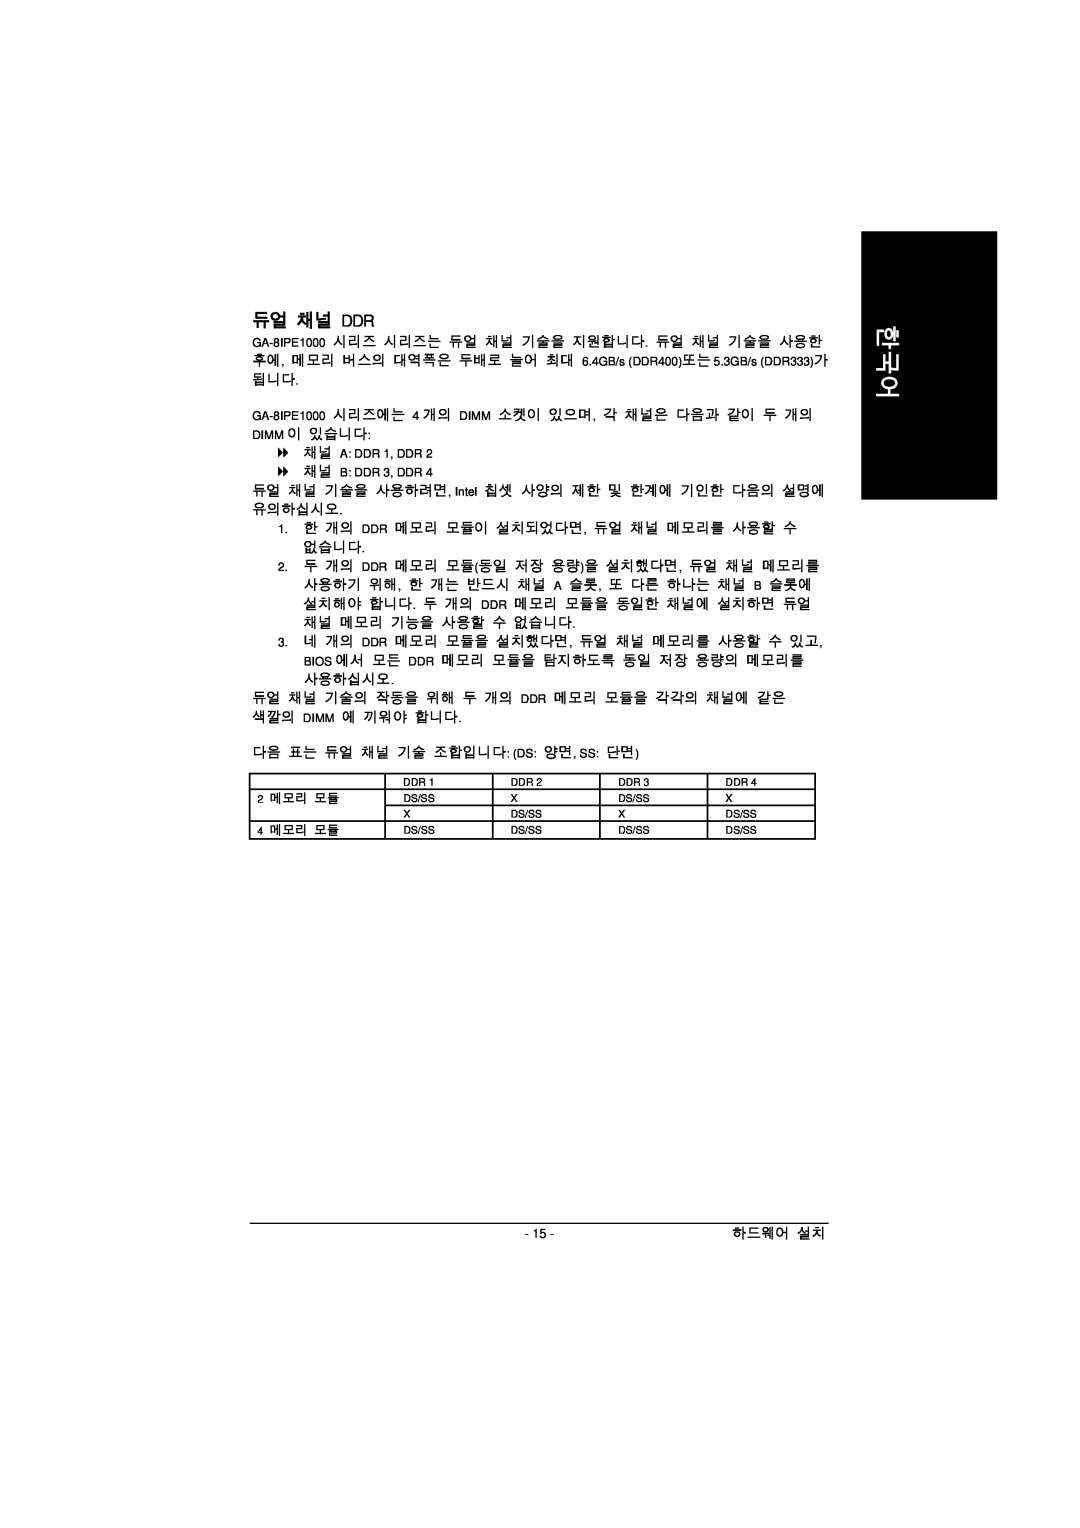 Intel GA-8IPE1000 manual 듀얼 채널 Ddr 